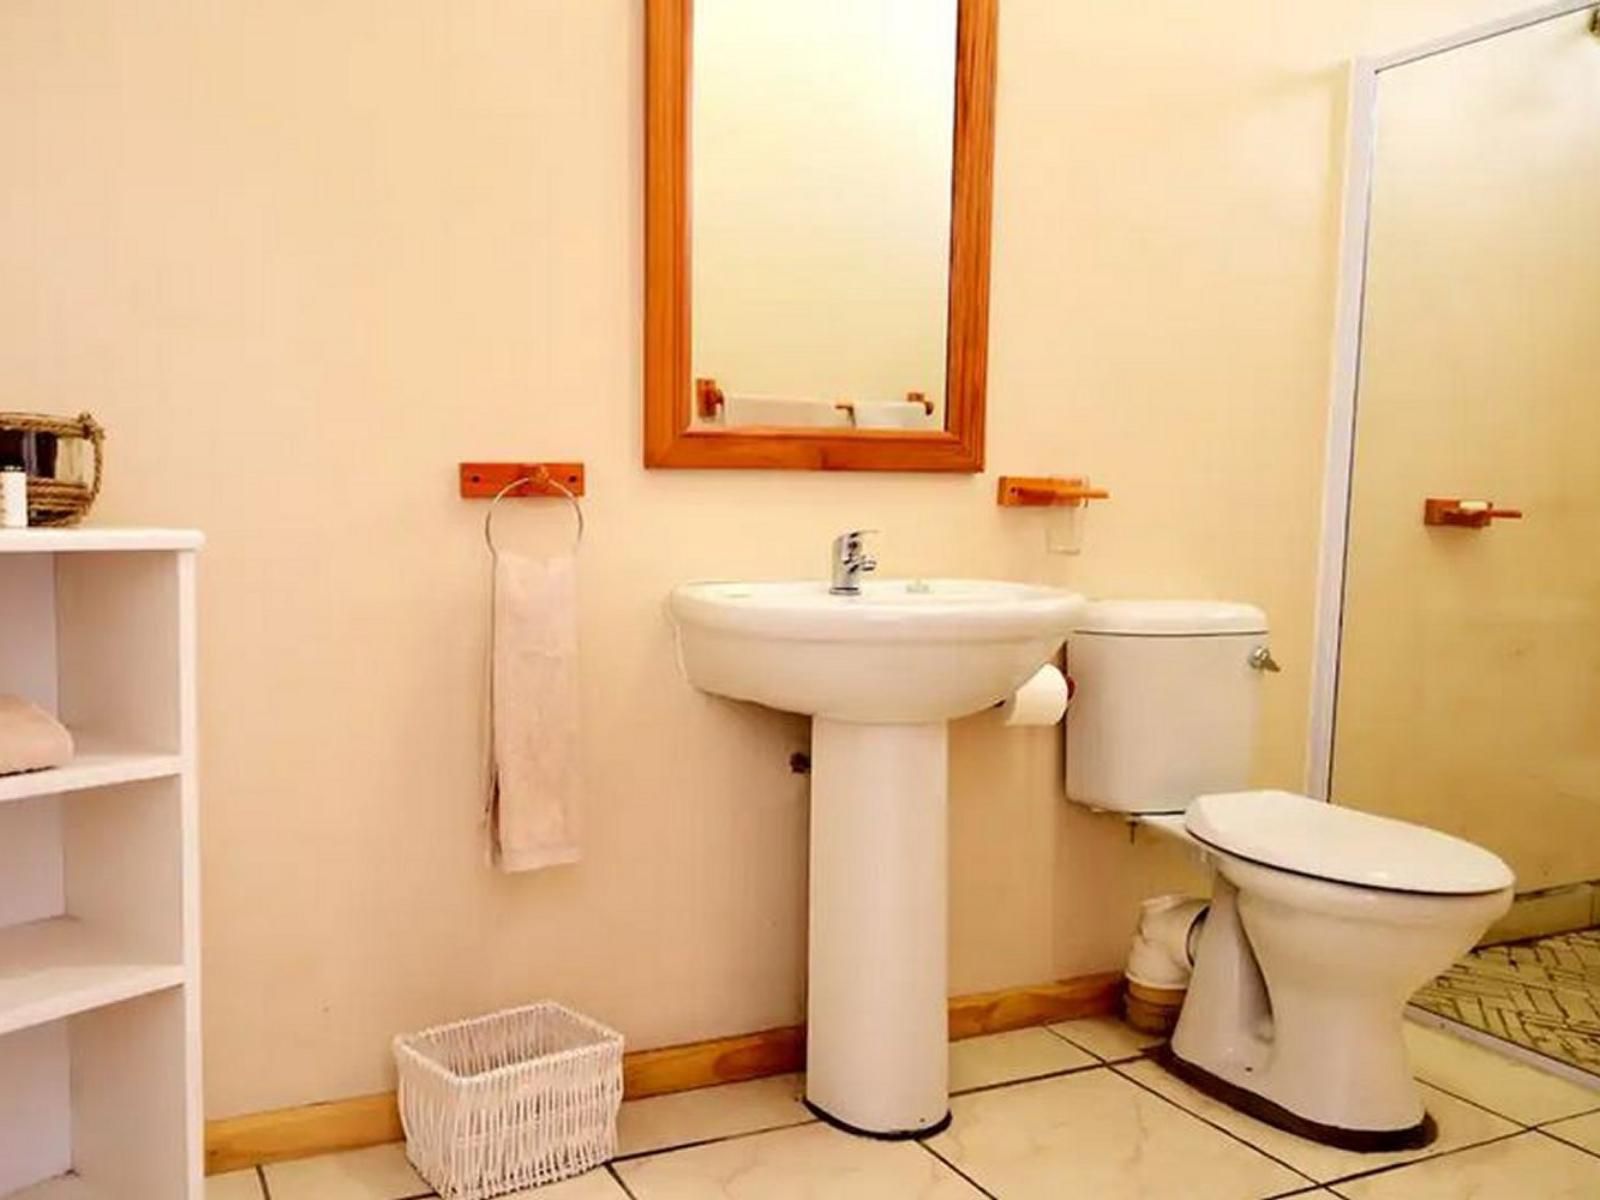 Laaiplek Hotel Velddrif Western Cape South Africa Sepia Tones, Bathroom